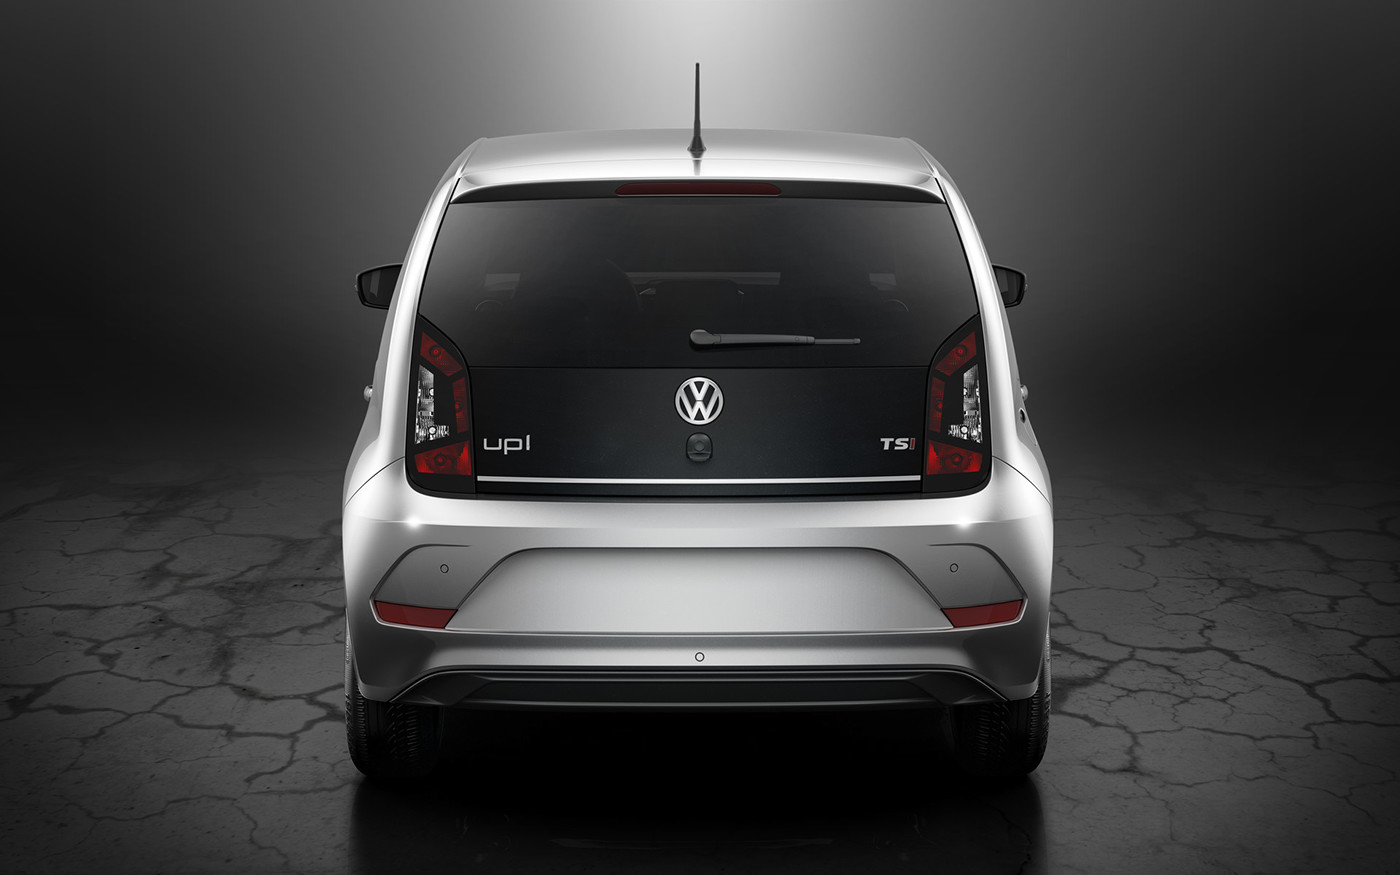 VW up visualization VRED photoshop